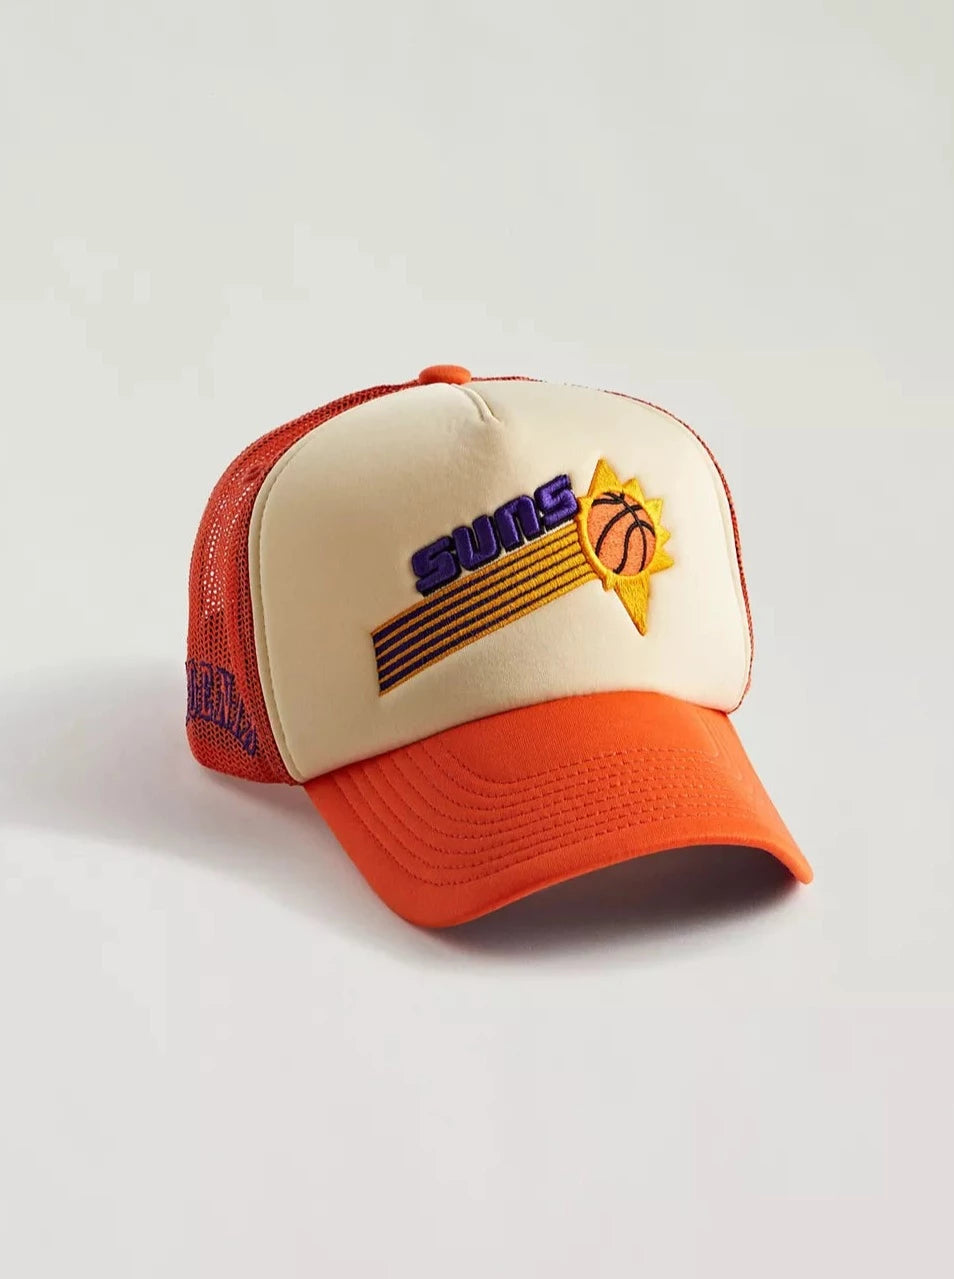 Retro Phoenix Suns Trucker Hat